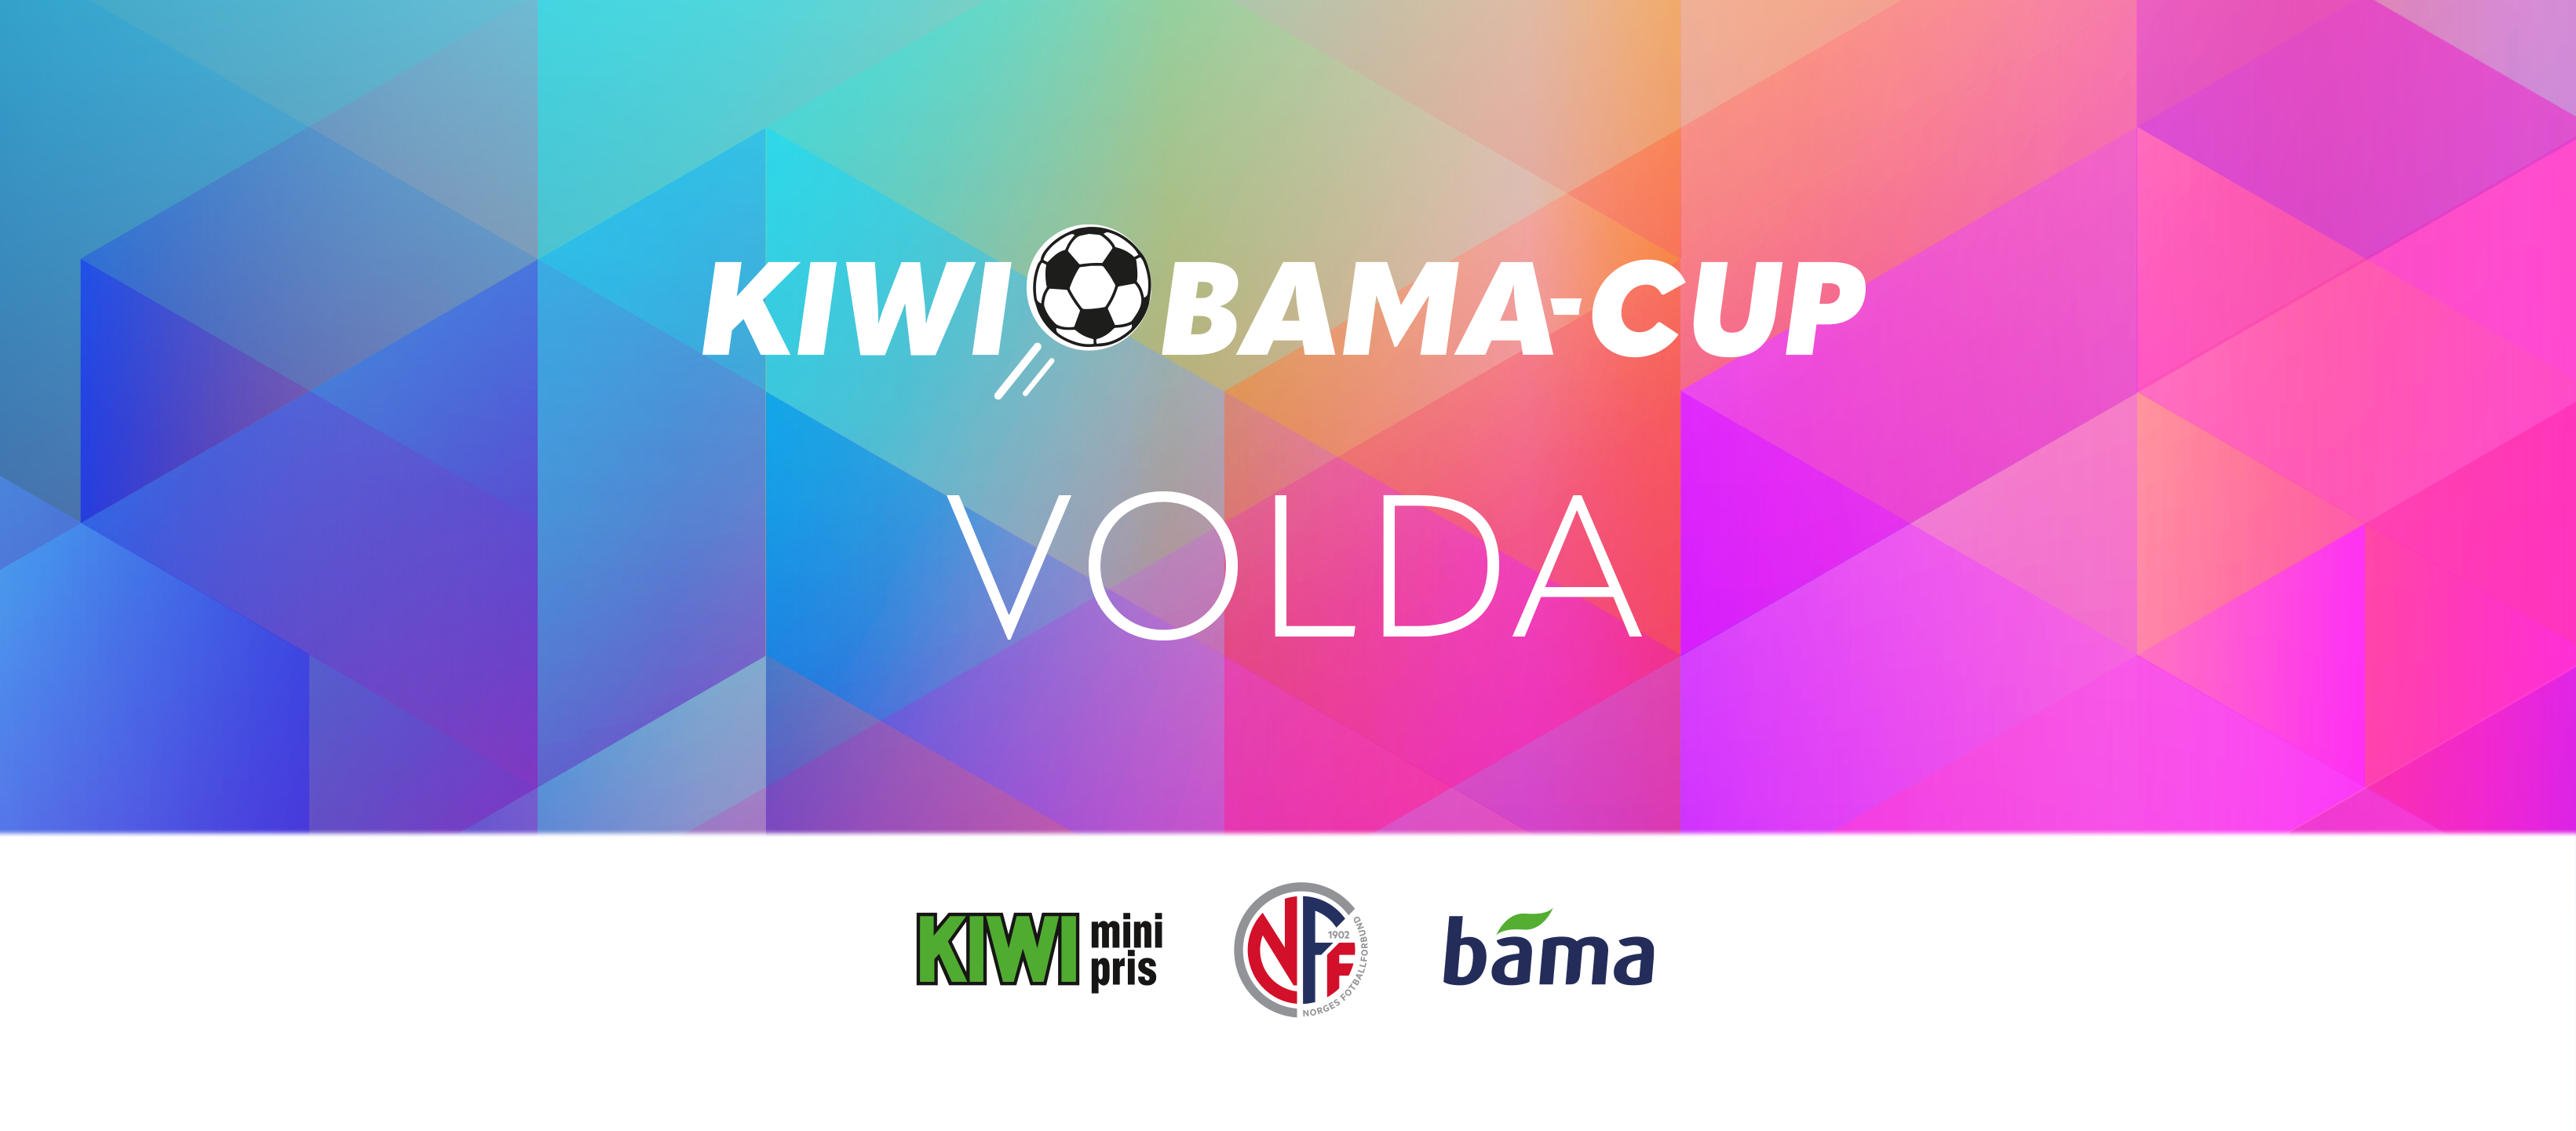 FB-BANNER KIWI-BAMA-Cup - Volda.png